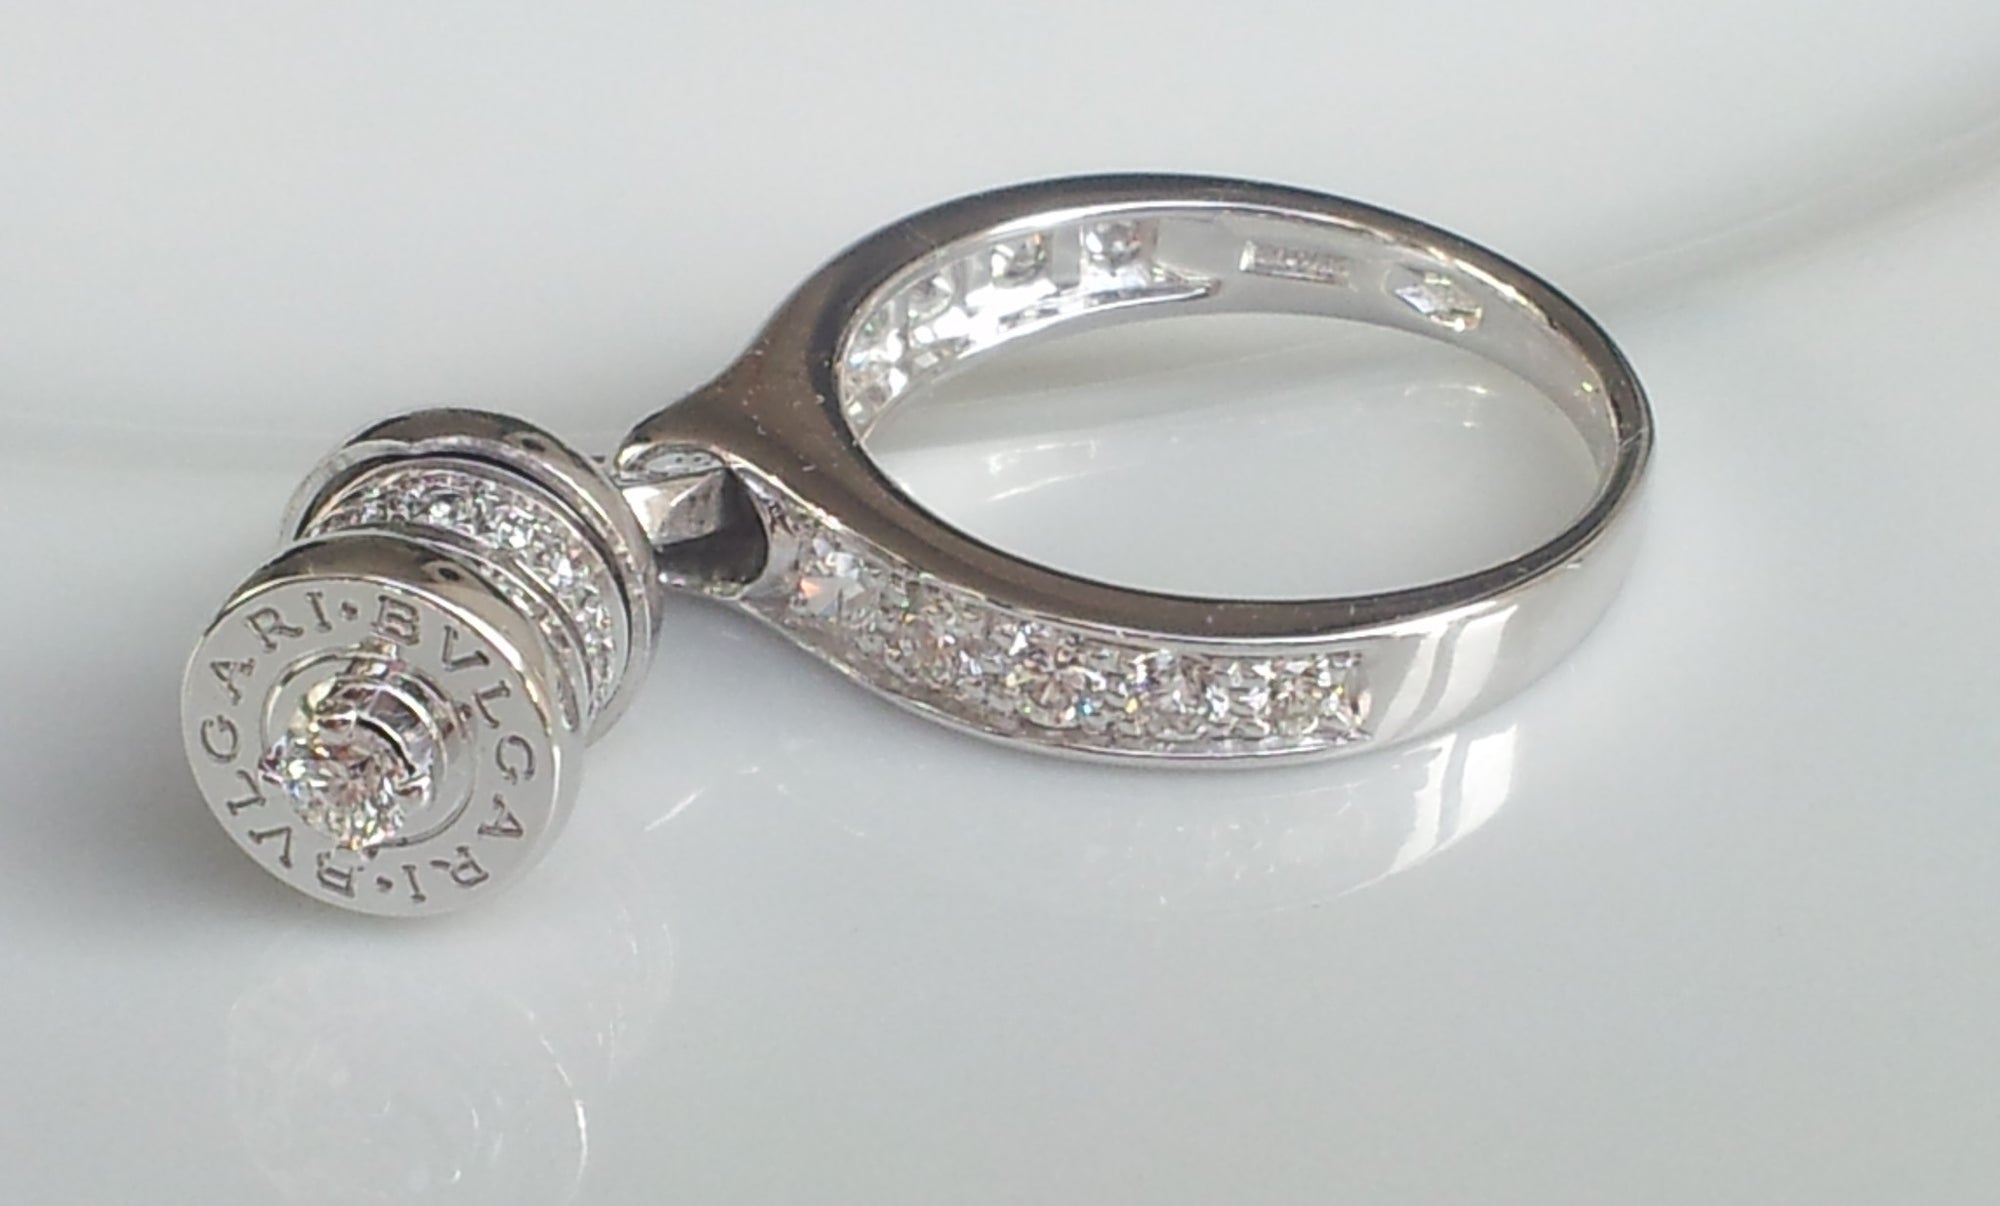 Bulgari Bvlgari B.Zero1 Diamond Pavé Charm Ring in 18K White Gold